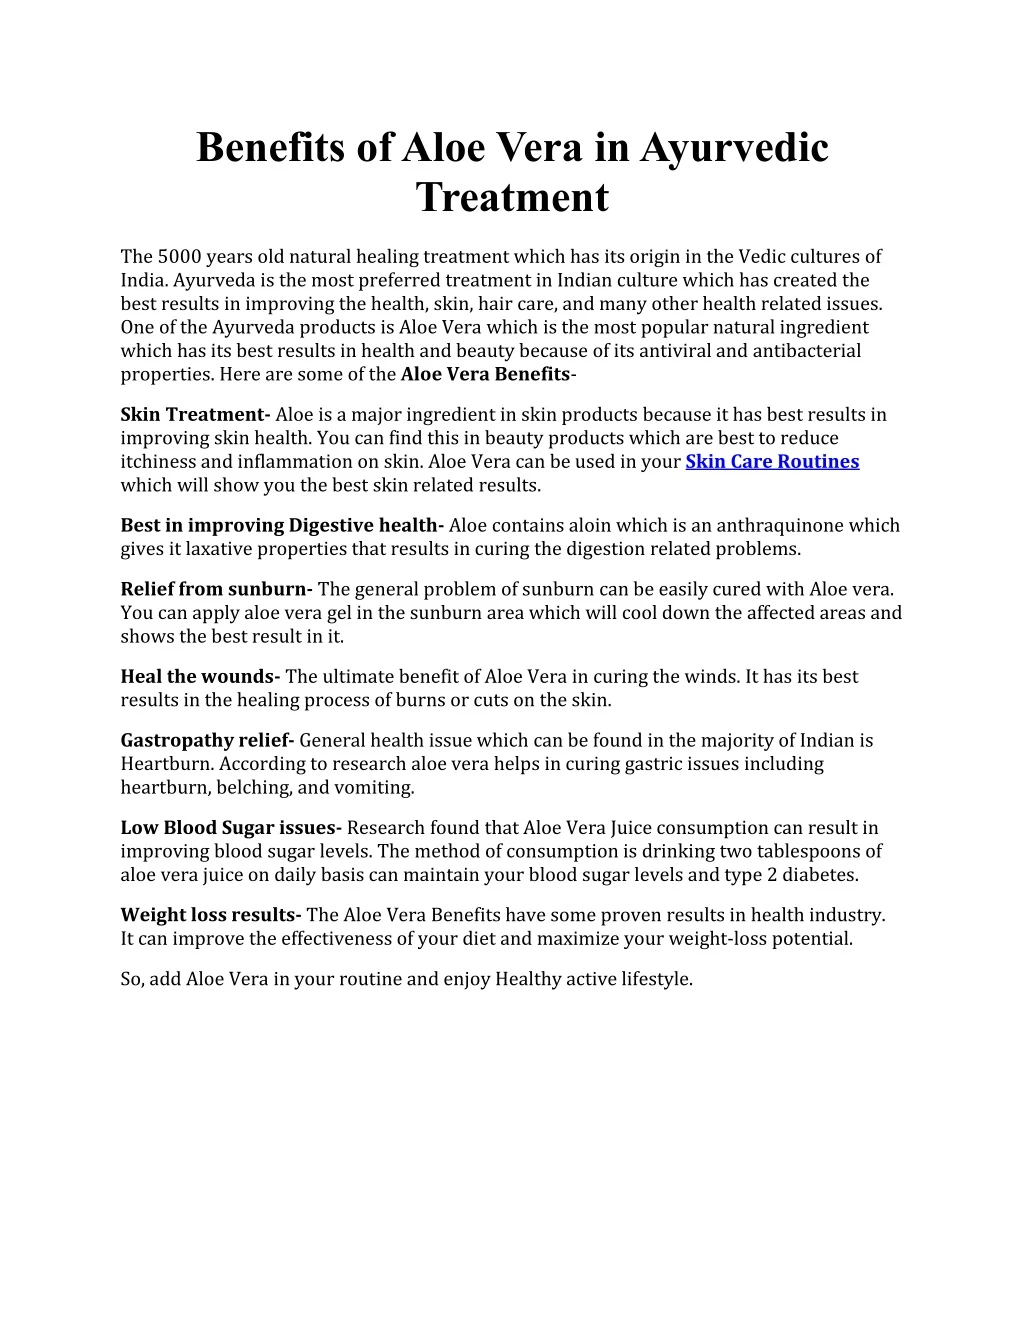 benefits ofaloe vera inayurvedic treatment